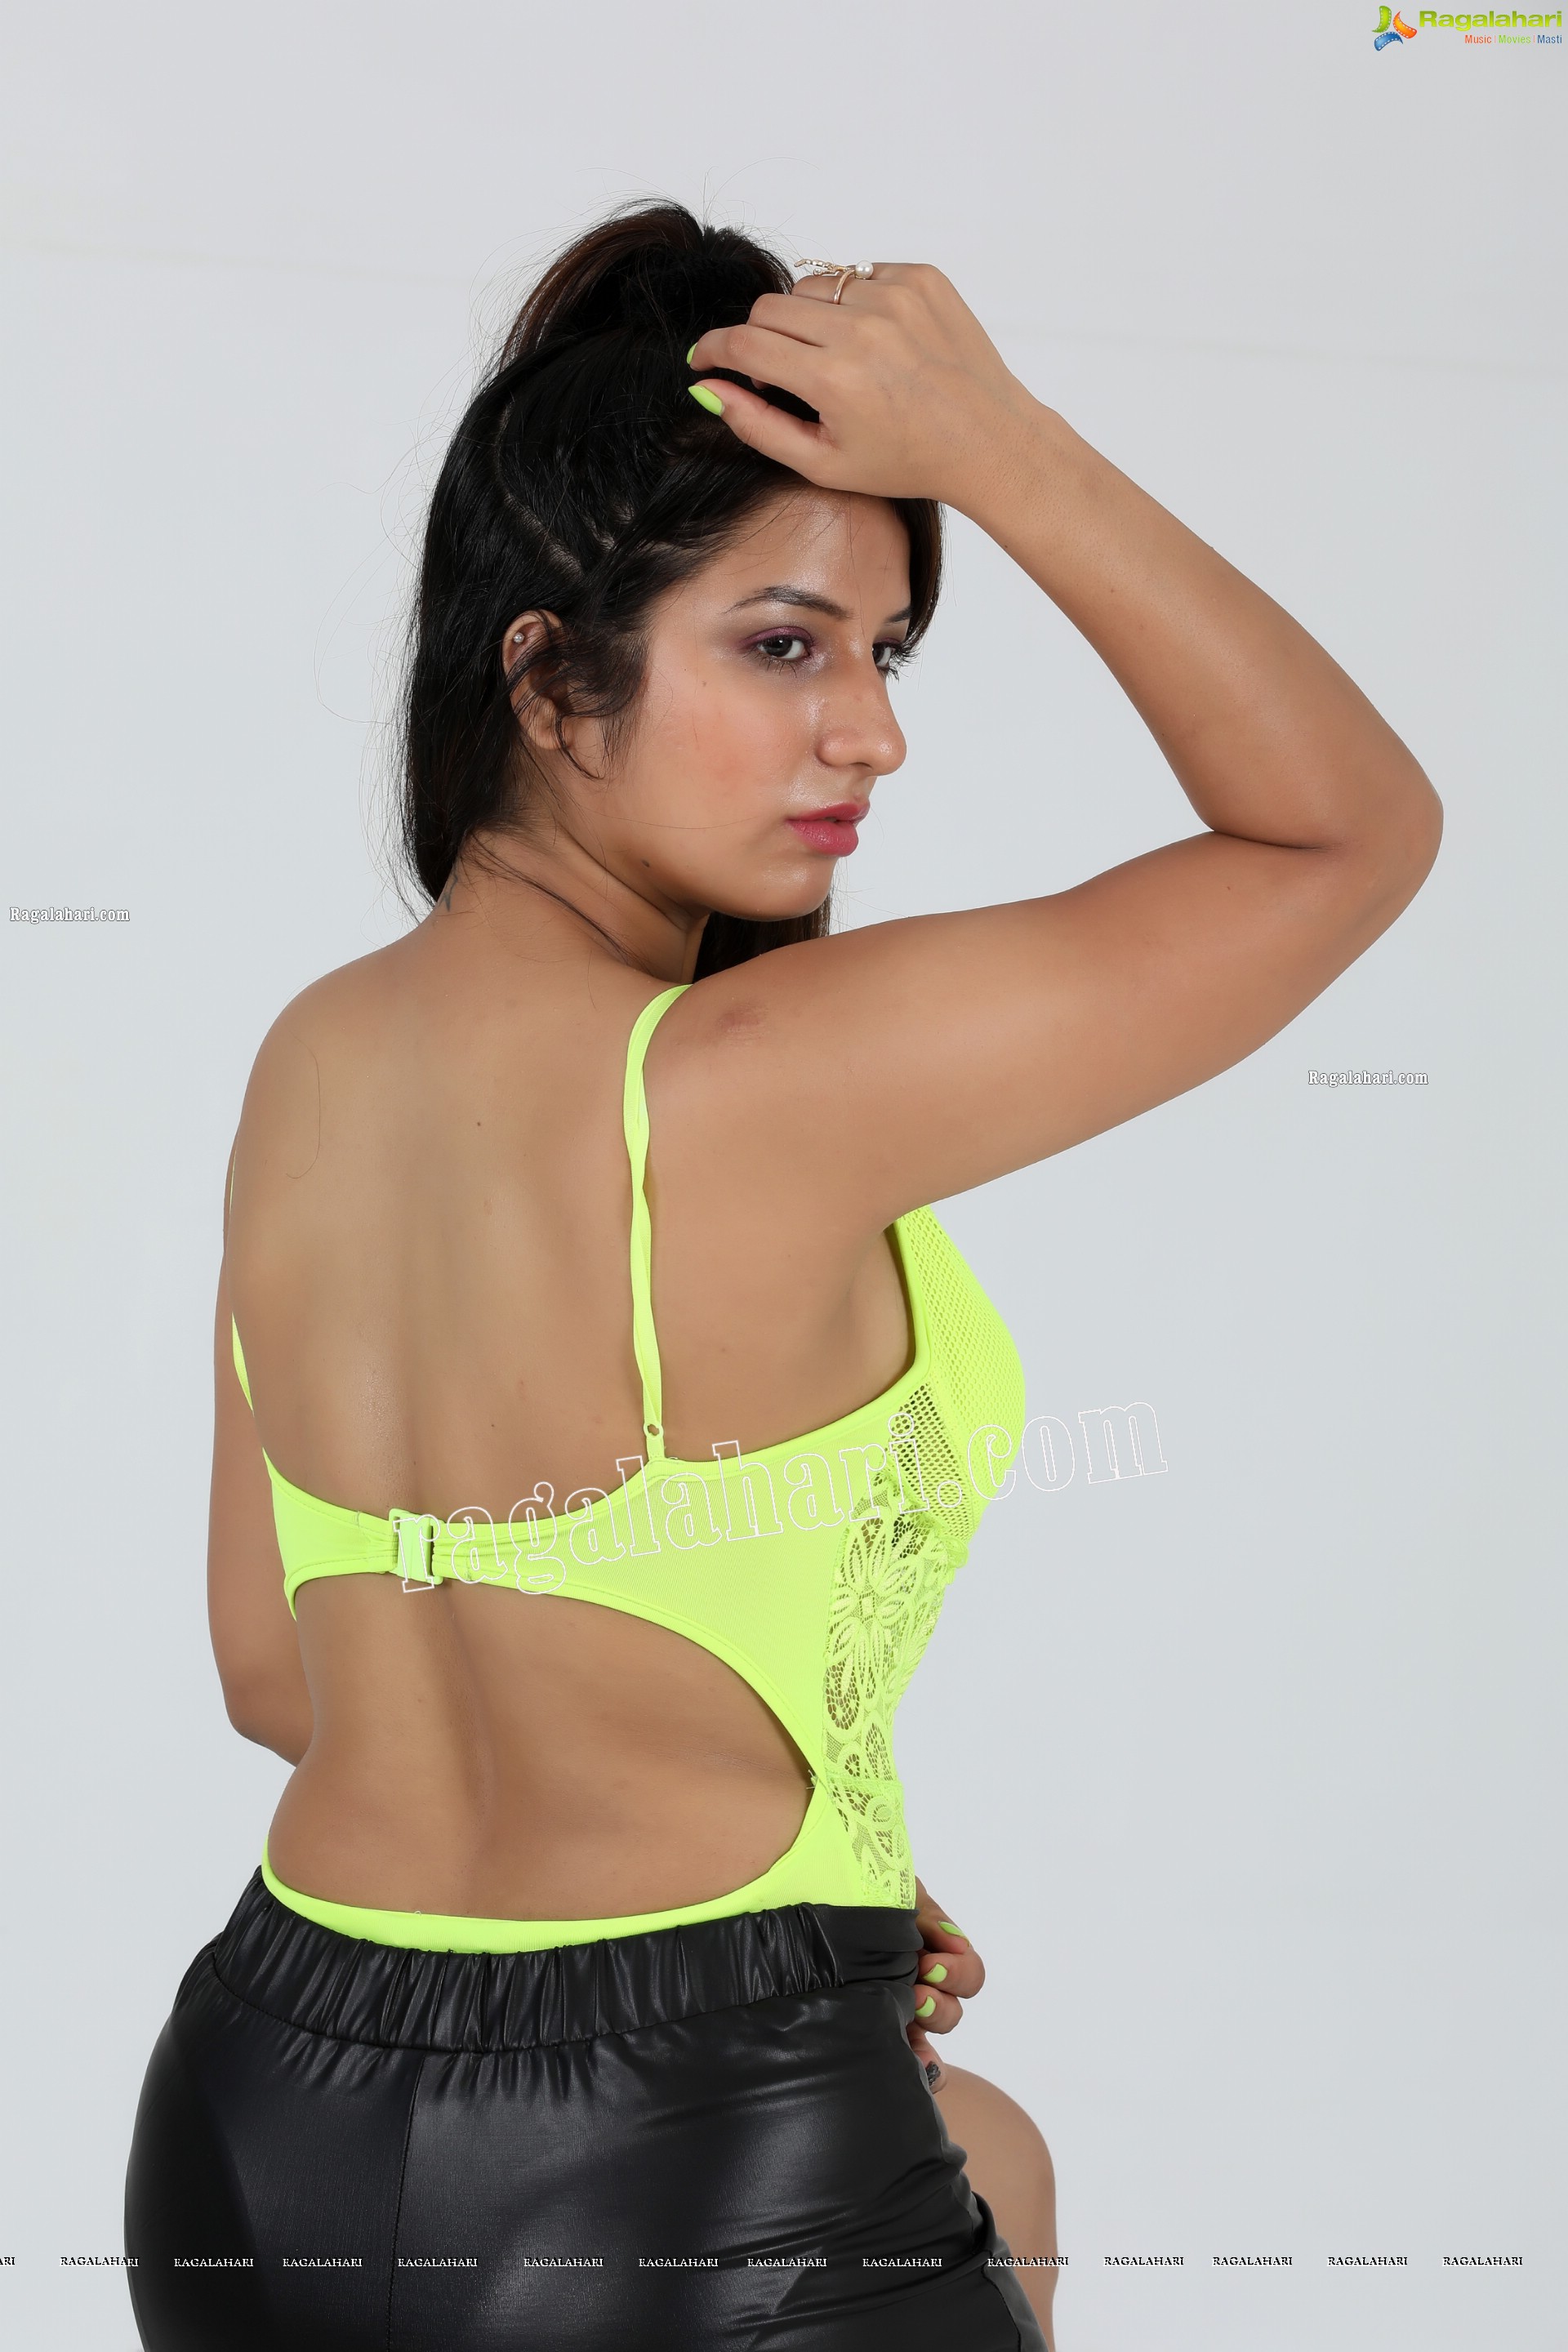 Shunaya Solanki Neon Yellow Crop Top and Slit Skirt Exclusive Photo Shoot